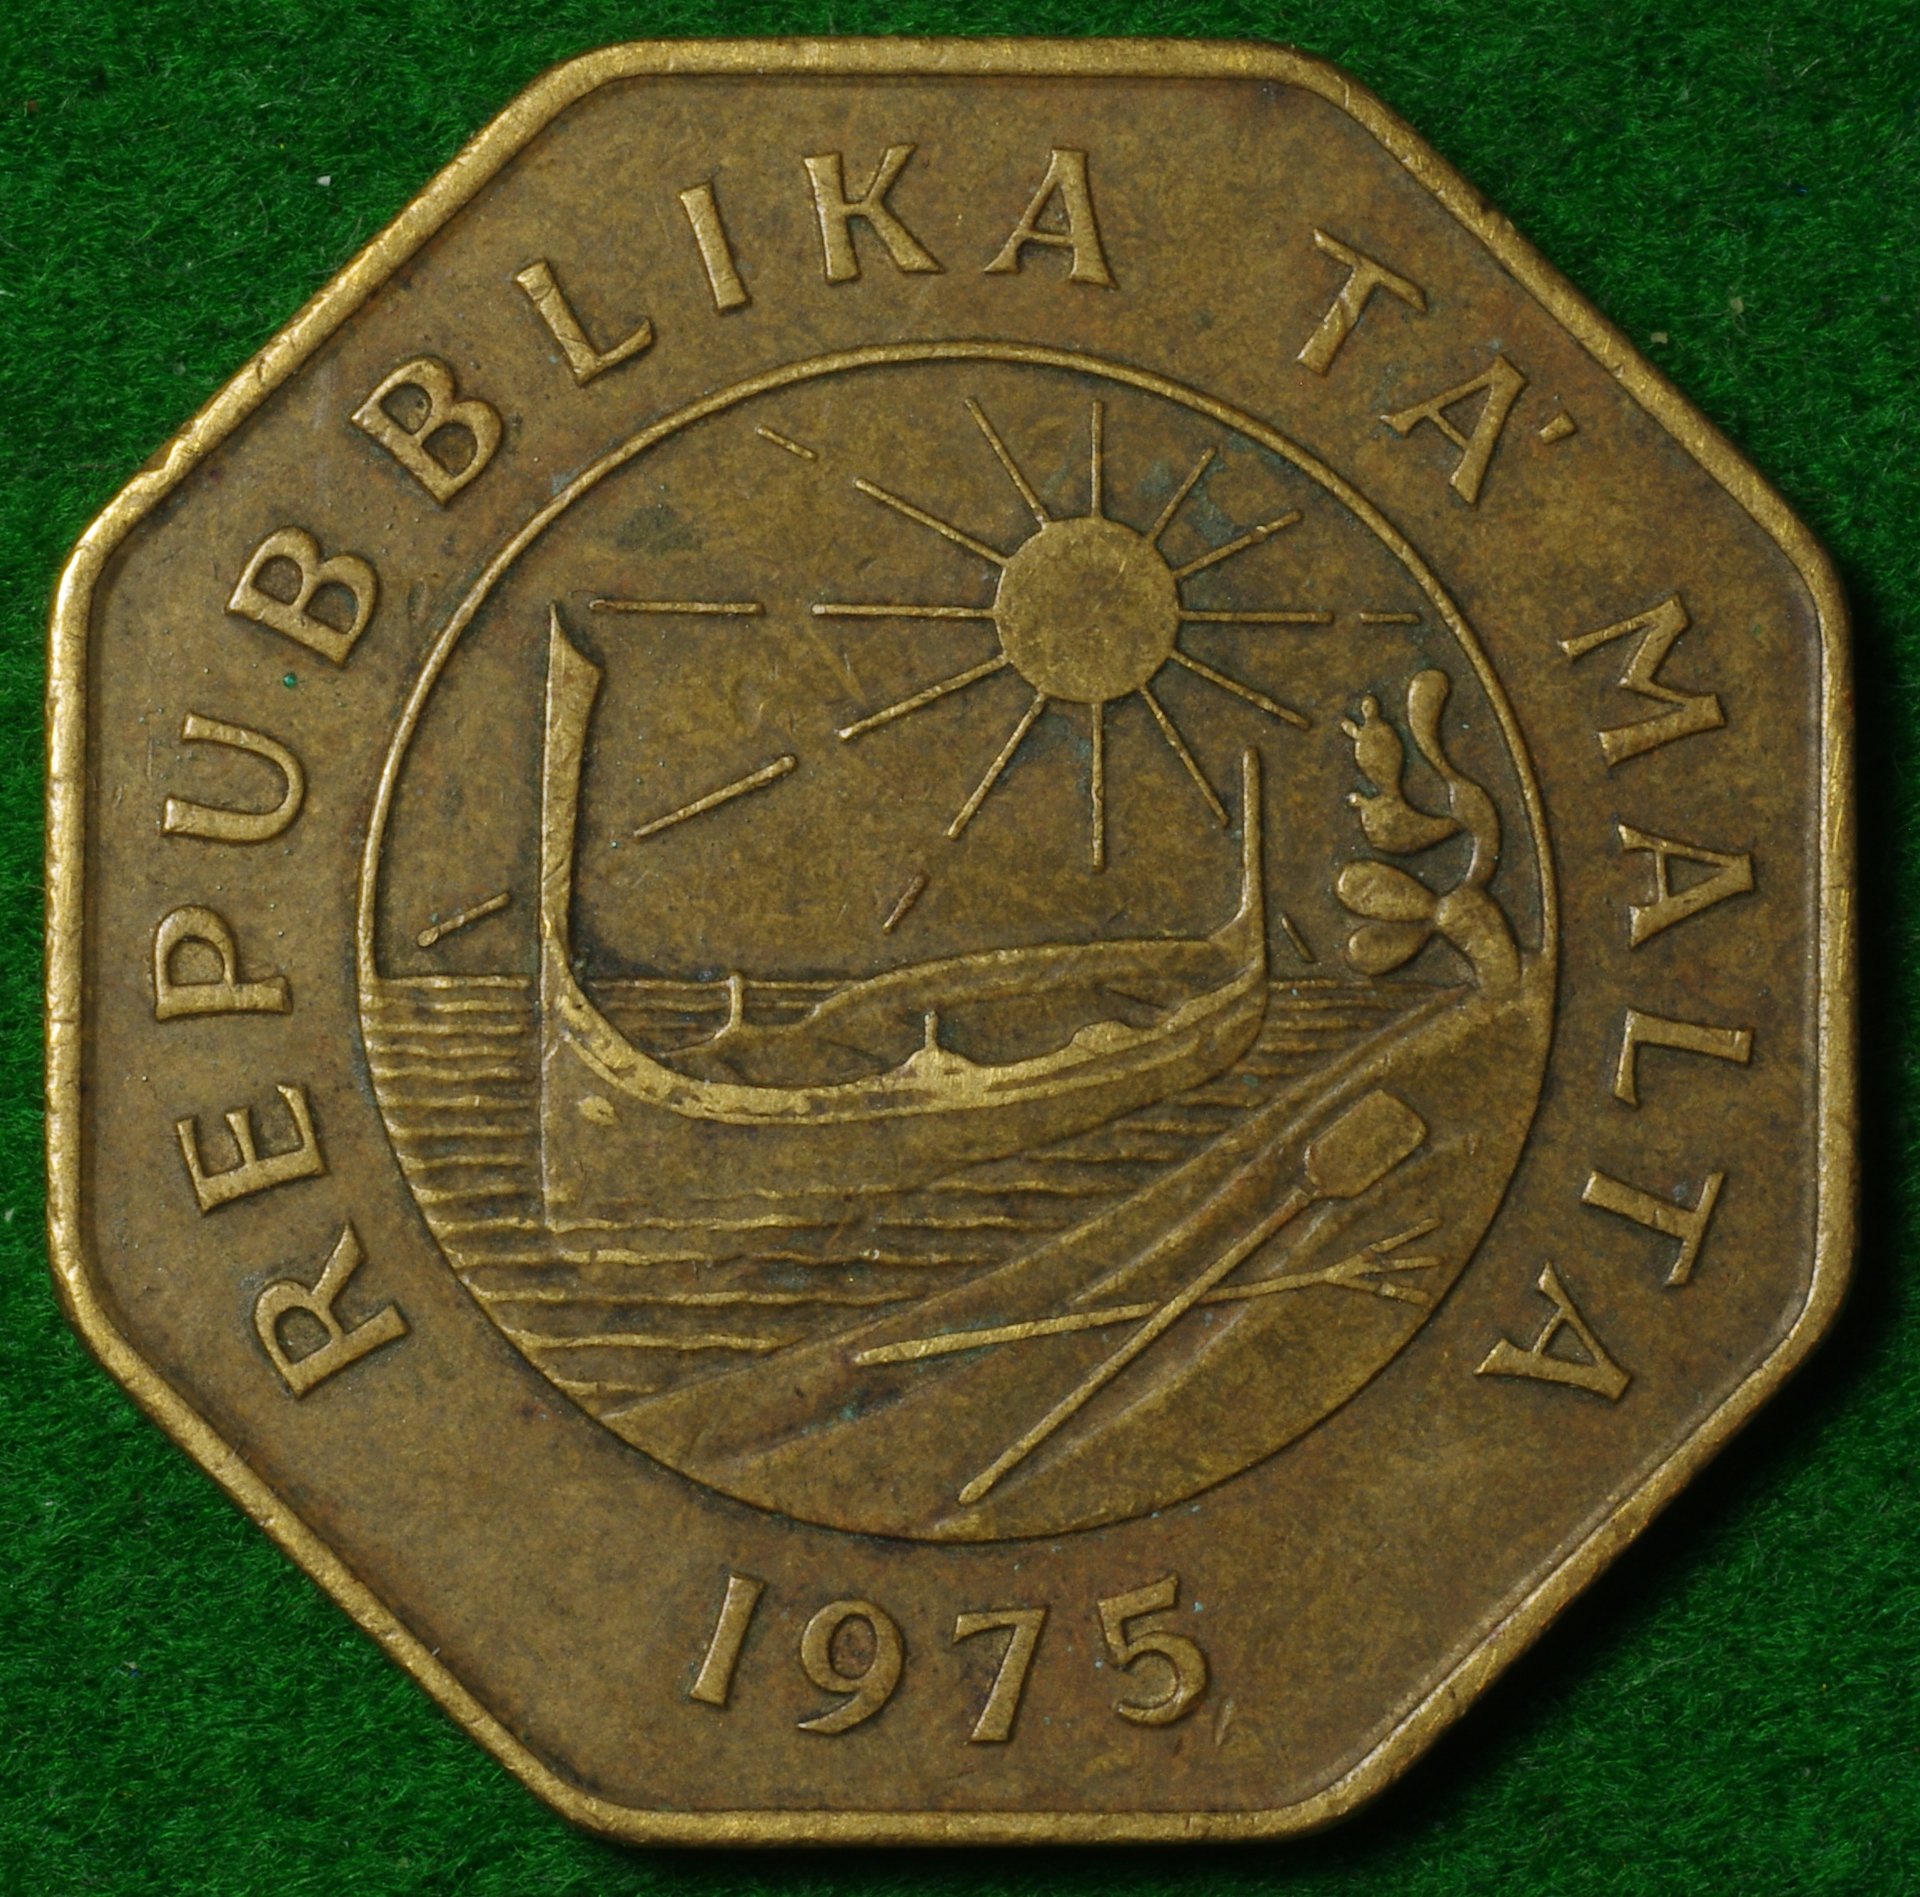 Malta 25c 1975 2.JPG